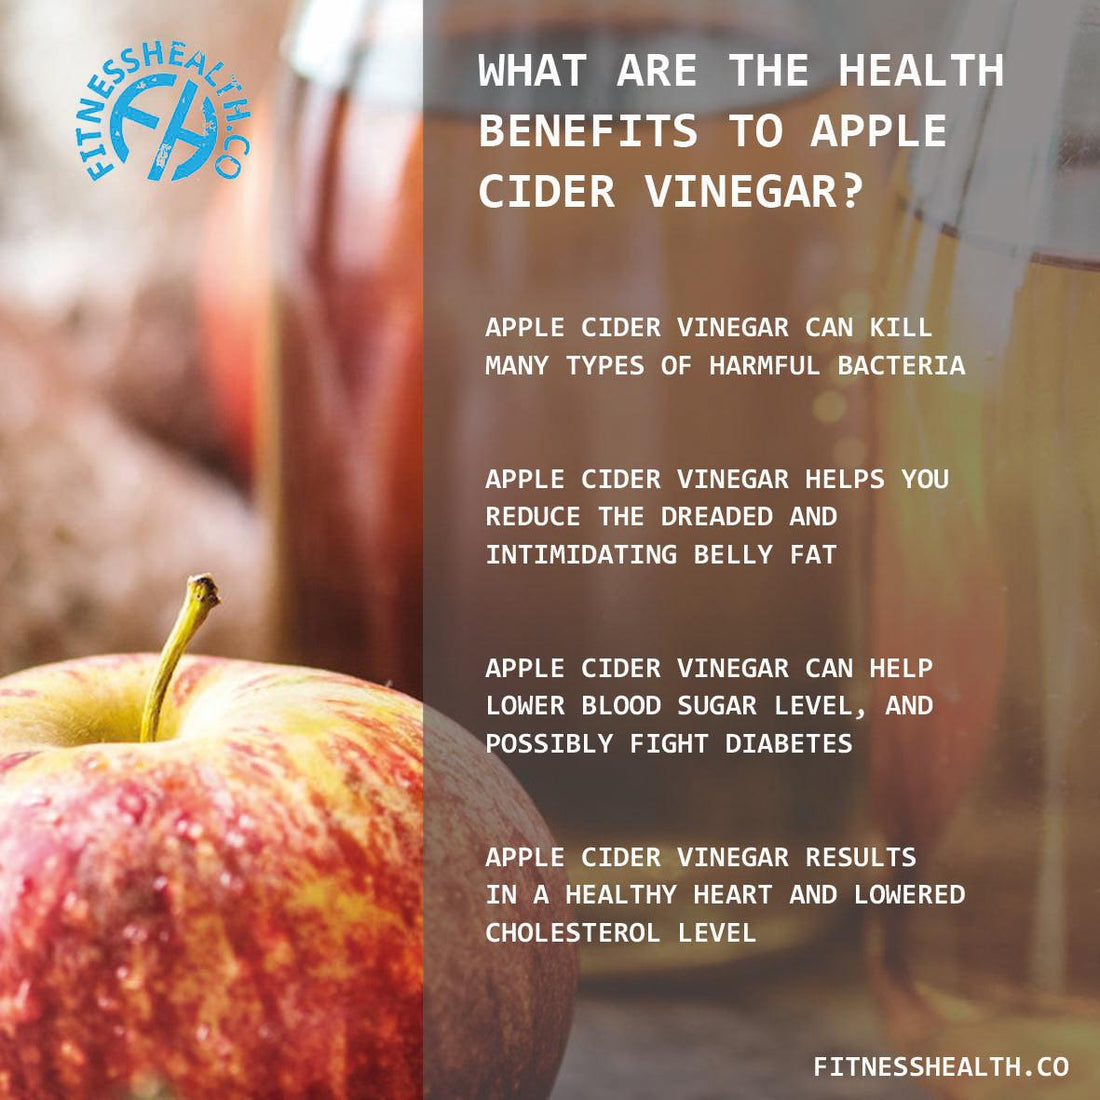 Apple Cider Vinegar & Health Benefits? - Baptist Health